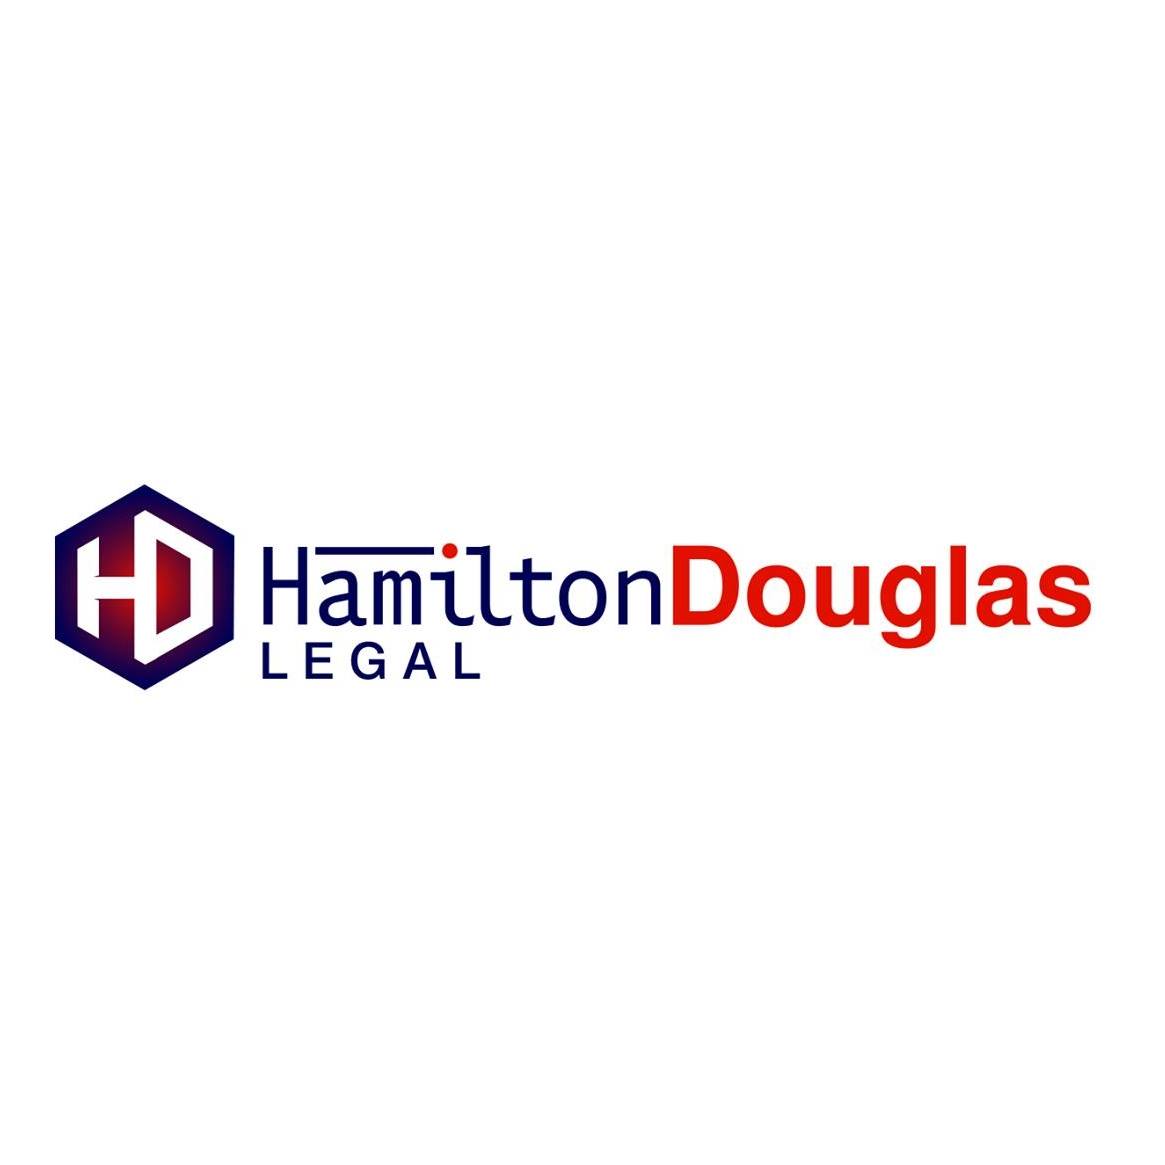 Logo of Hamilton Douglas Legal Legal Services In Glasgow, Scotland